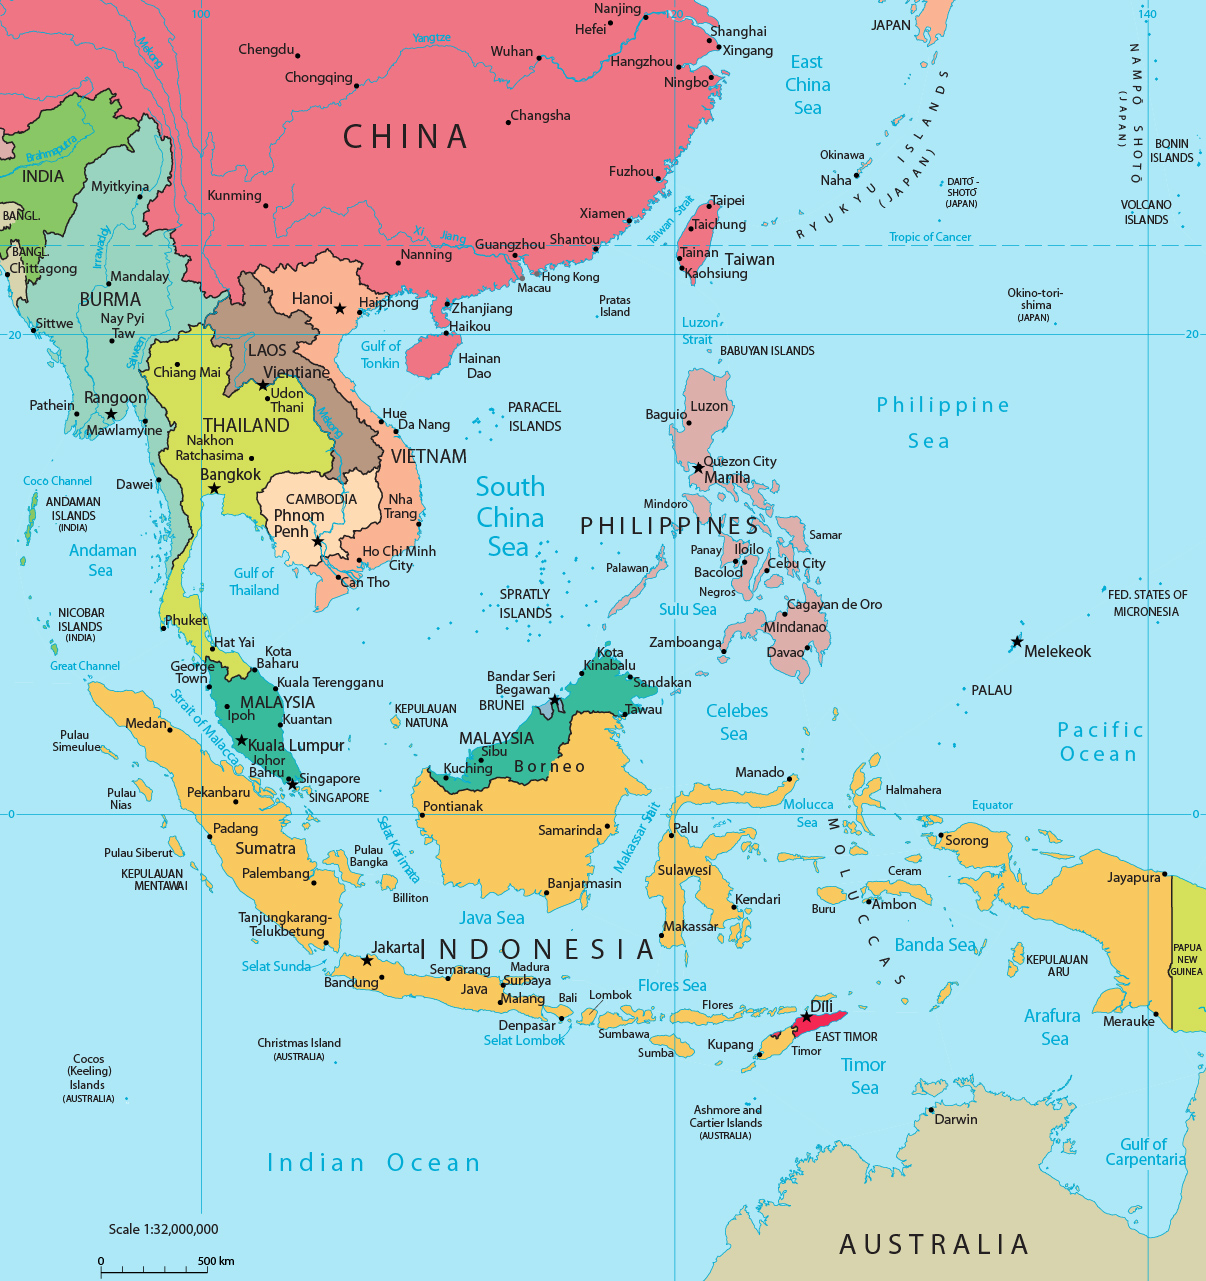 Map of Southeast Asia - Indonesia, Malaysia, Thailand